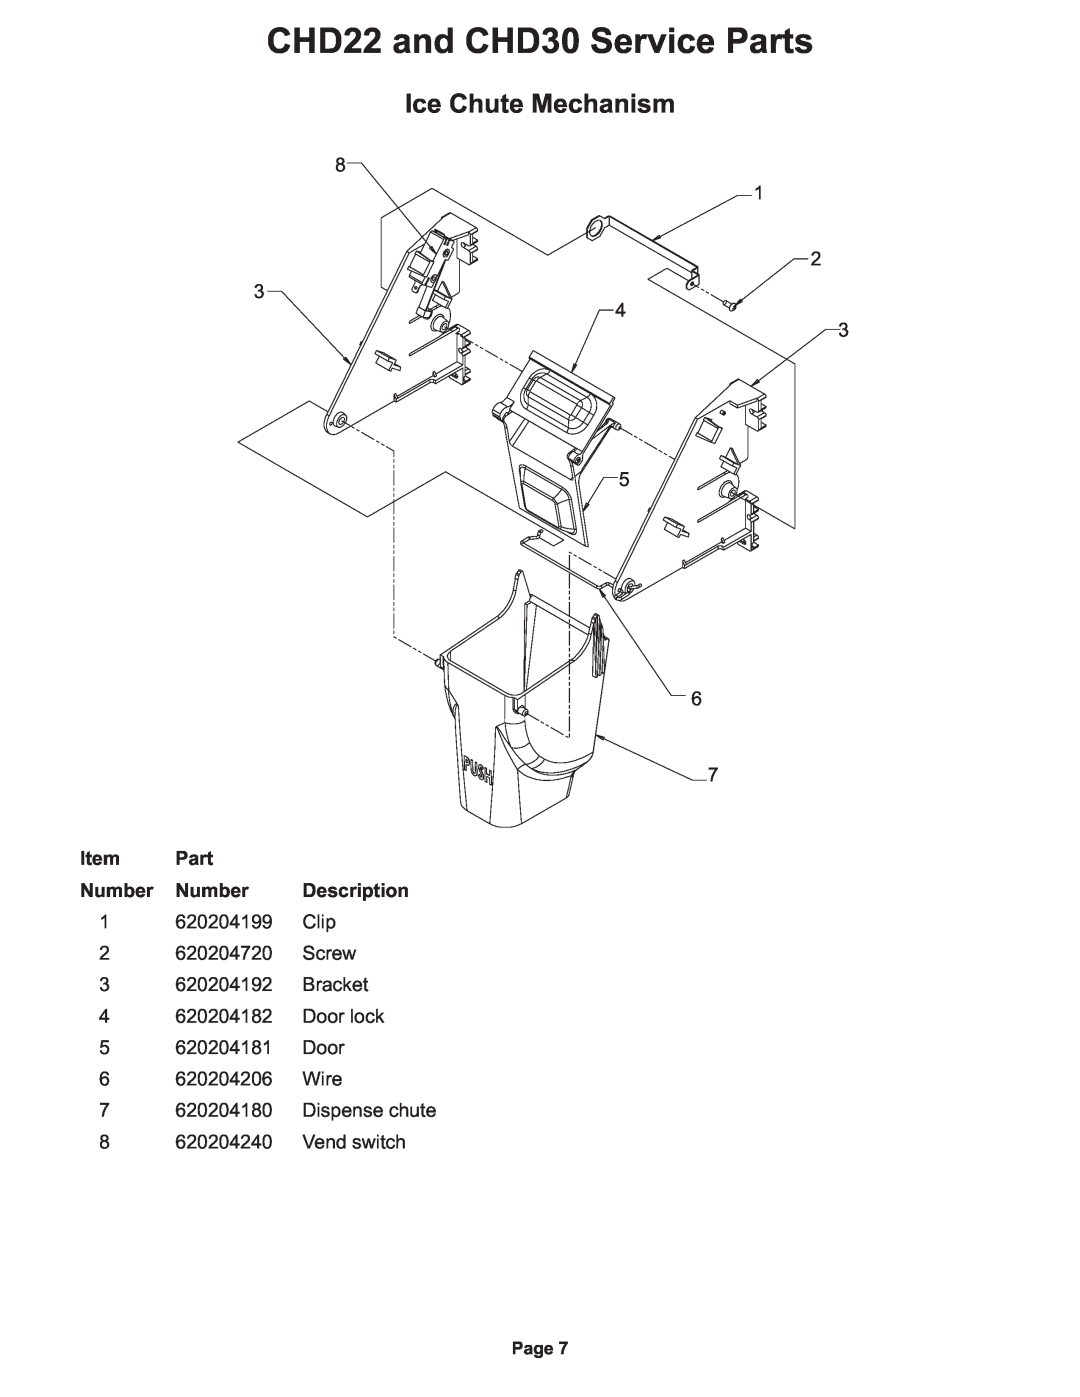 Cornelius manual CHD22 and CHD30 Service Parts, Ice Chute Mechanism, Number, Description 